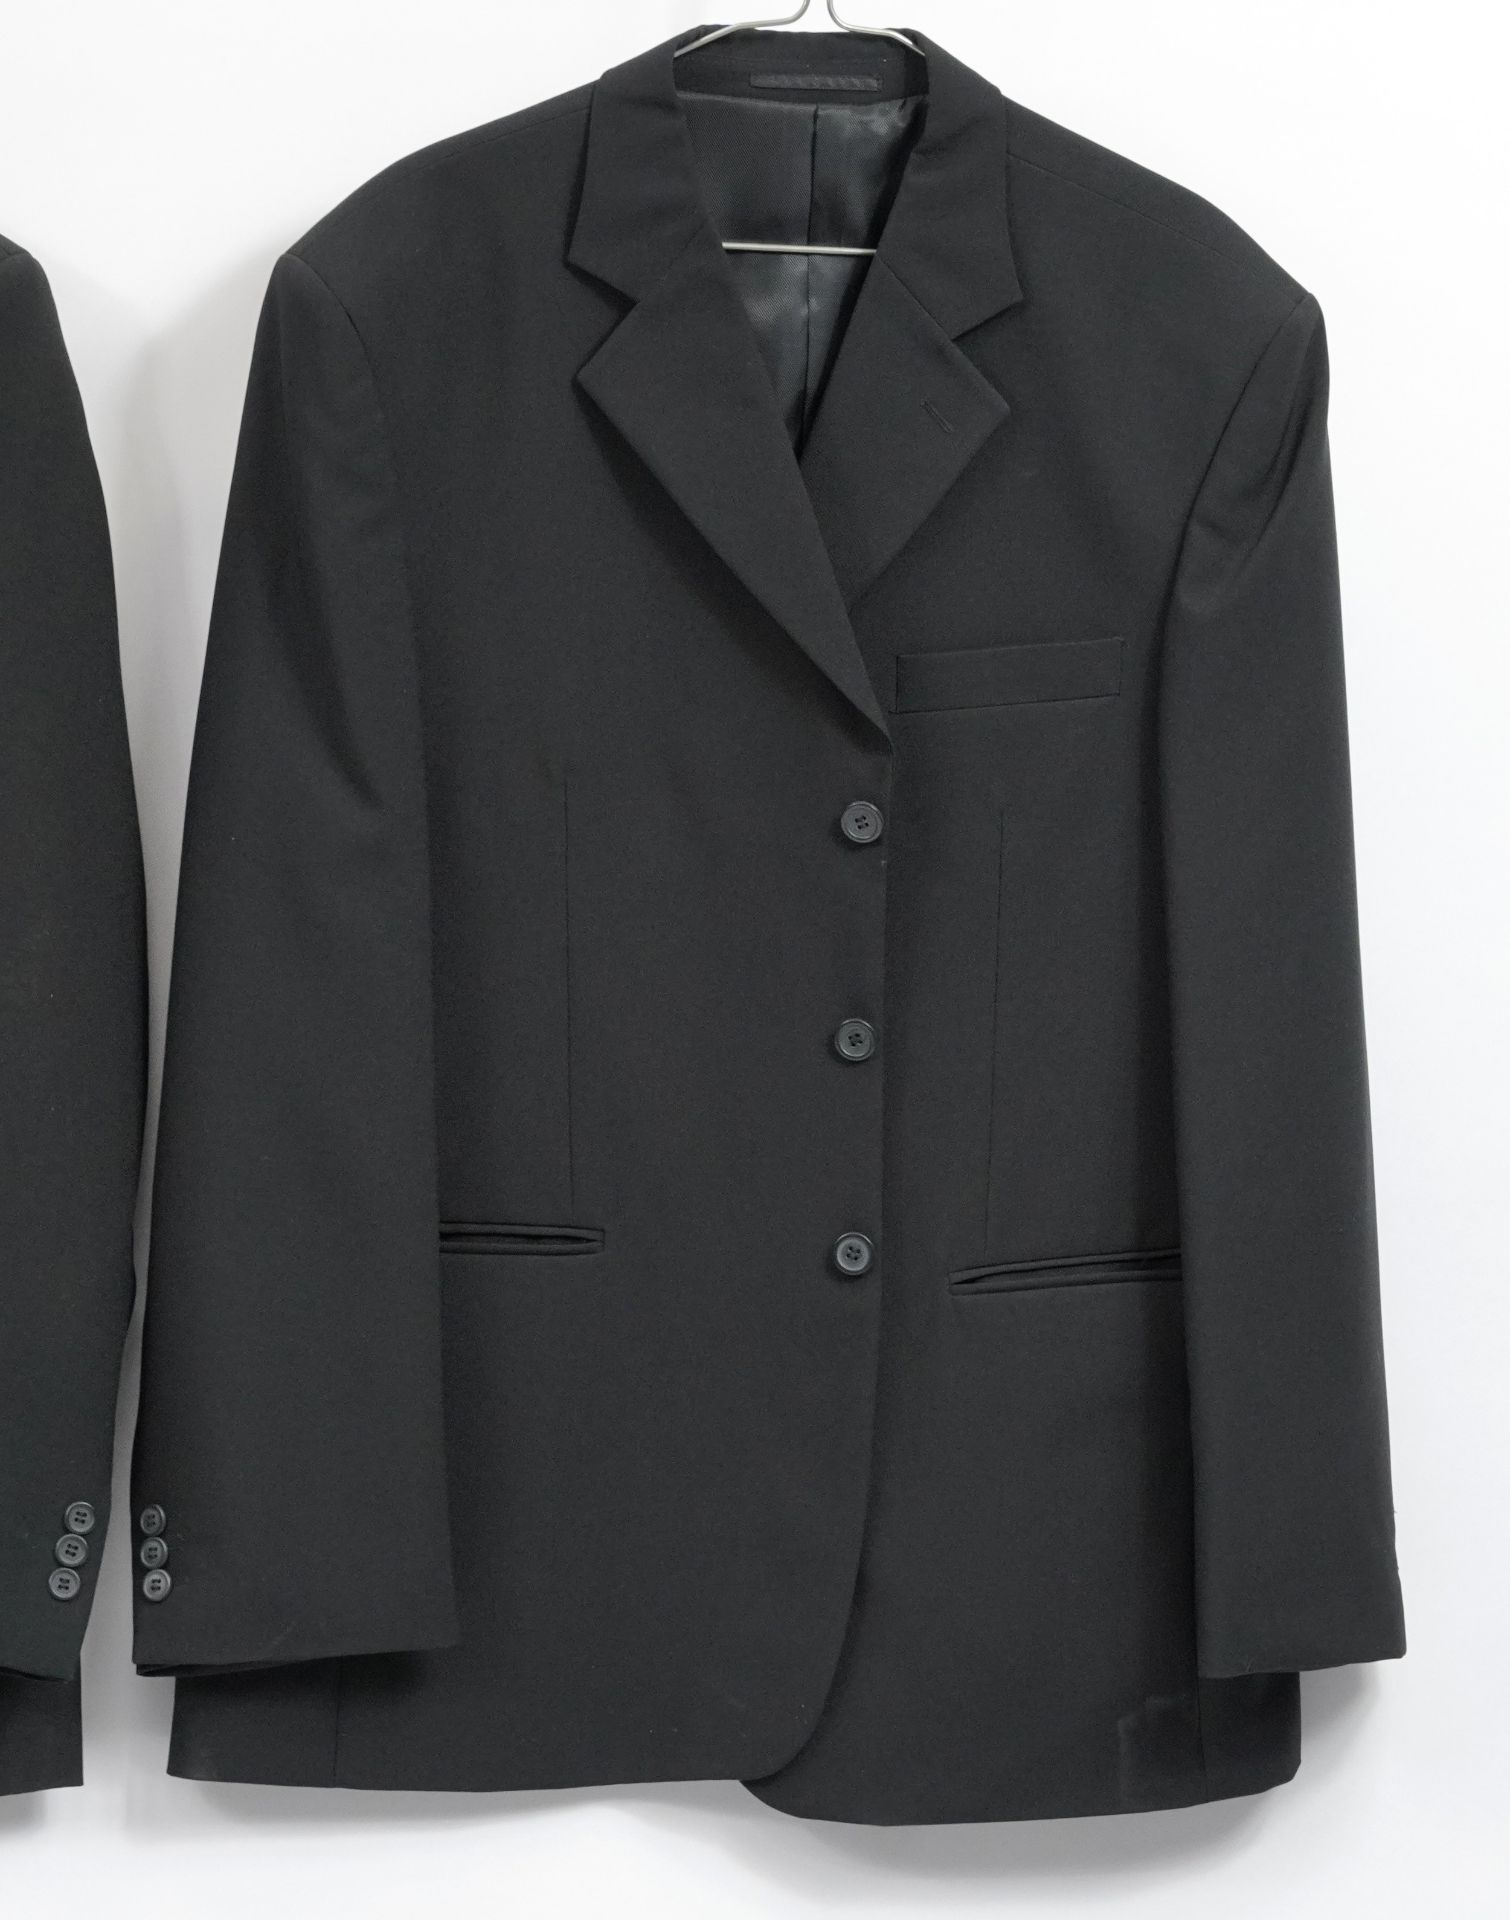 Three large black gentlemans suit jackets - Image 3 of 4